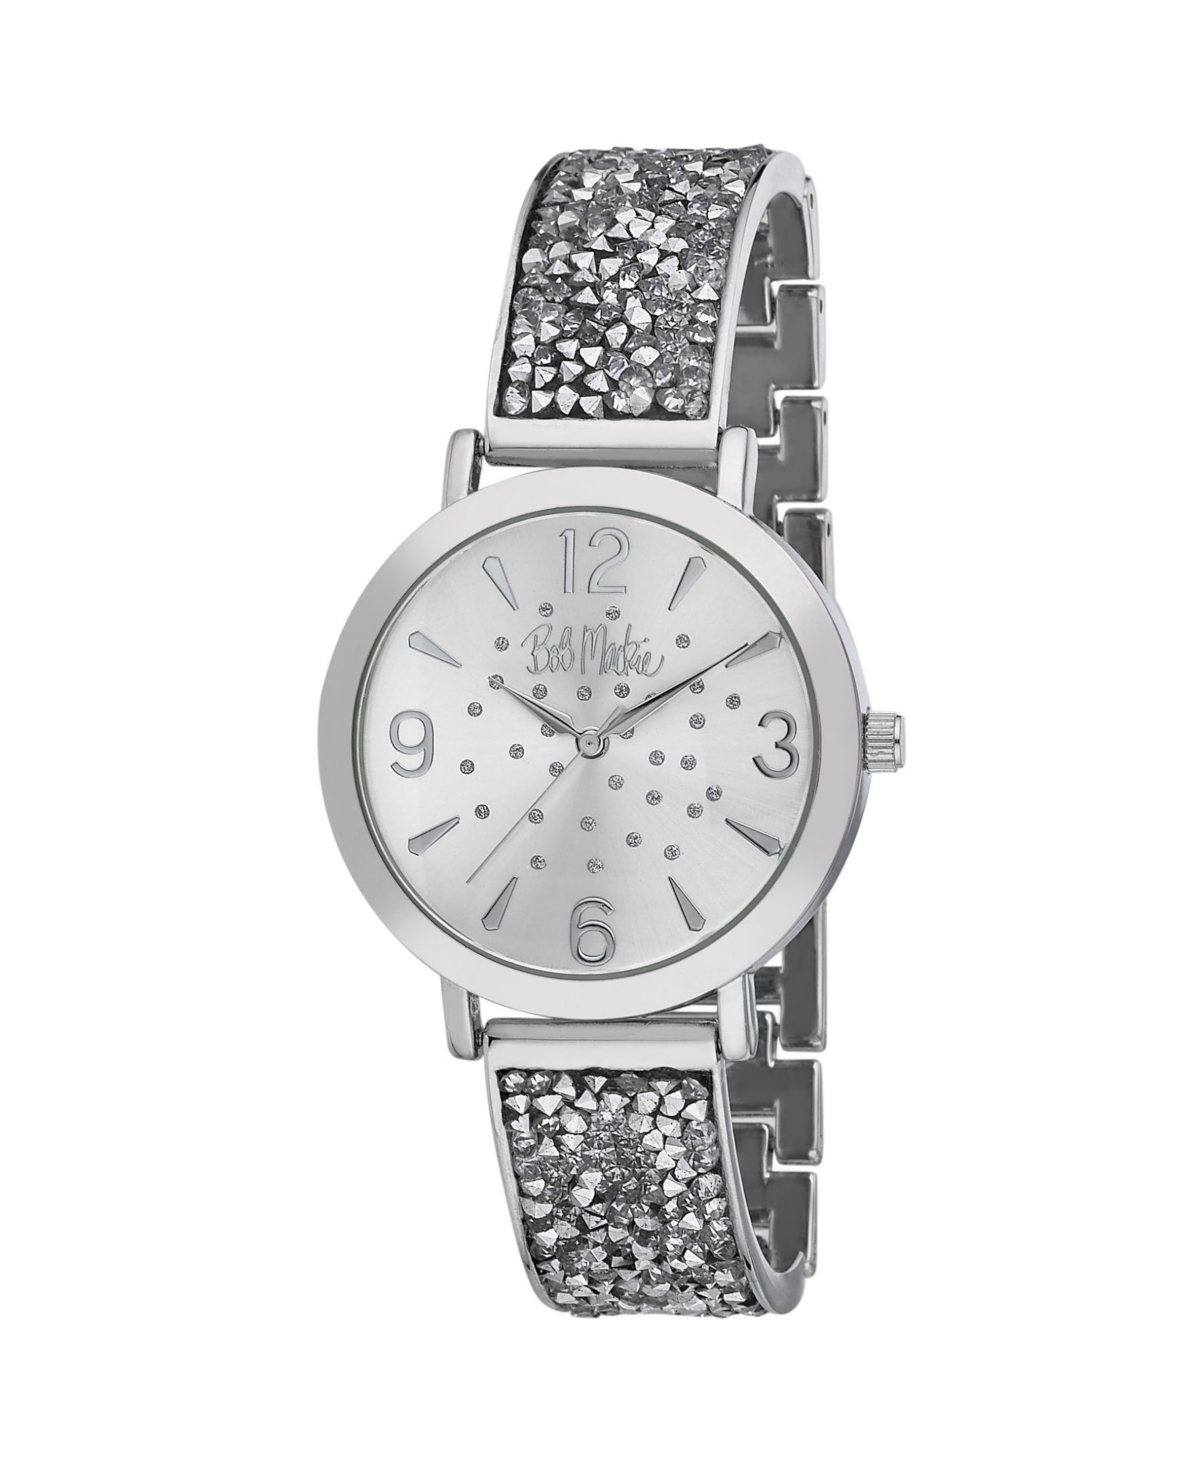 Bob Mackie Women's Silver-Tone Alloy Bracelet Glitz Watch, 36mm